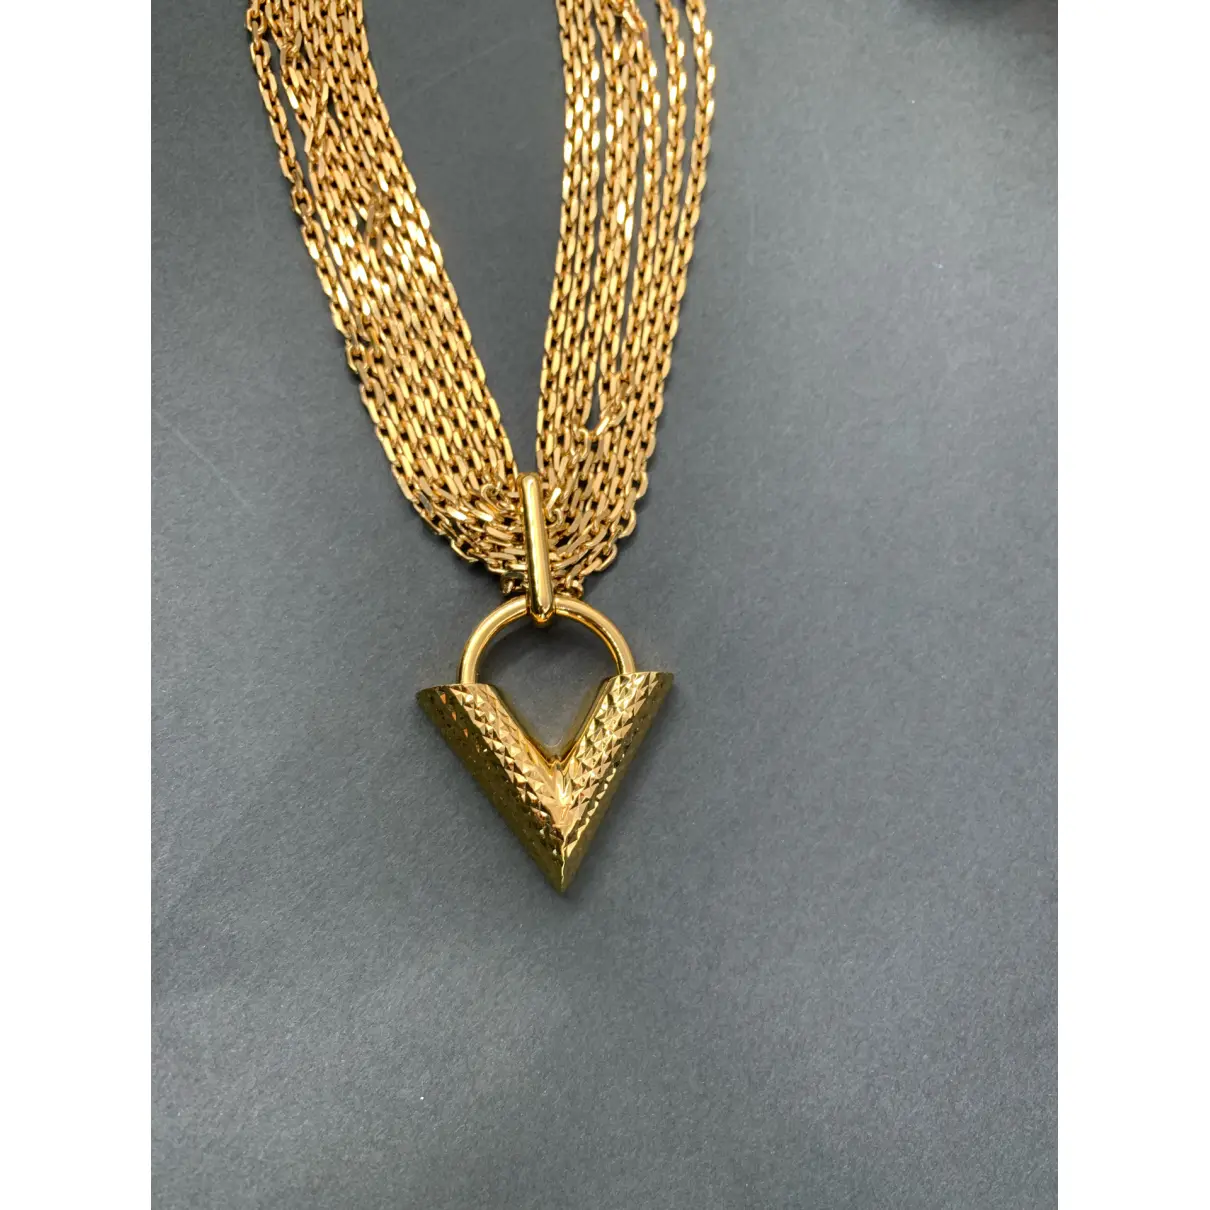 Buy Louis Vuitton Essential V necklace online